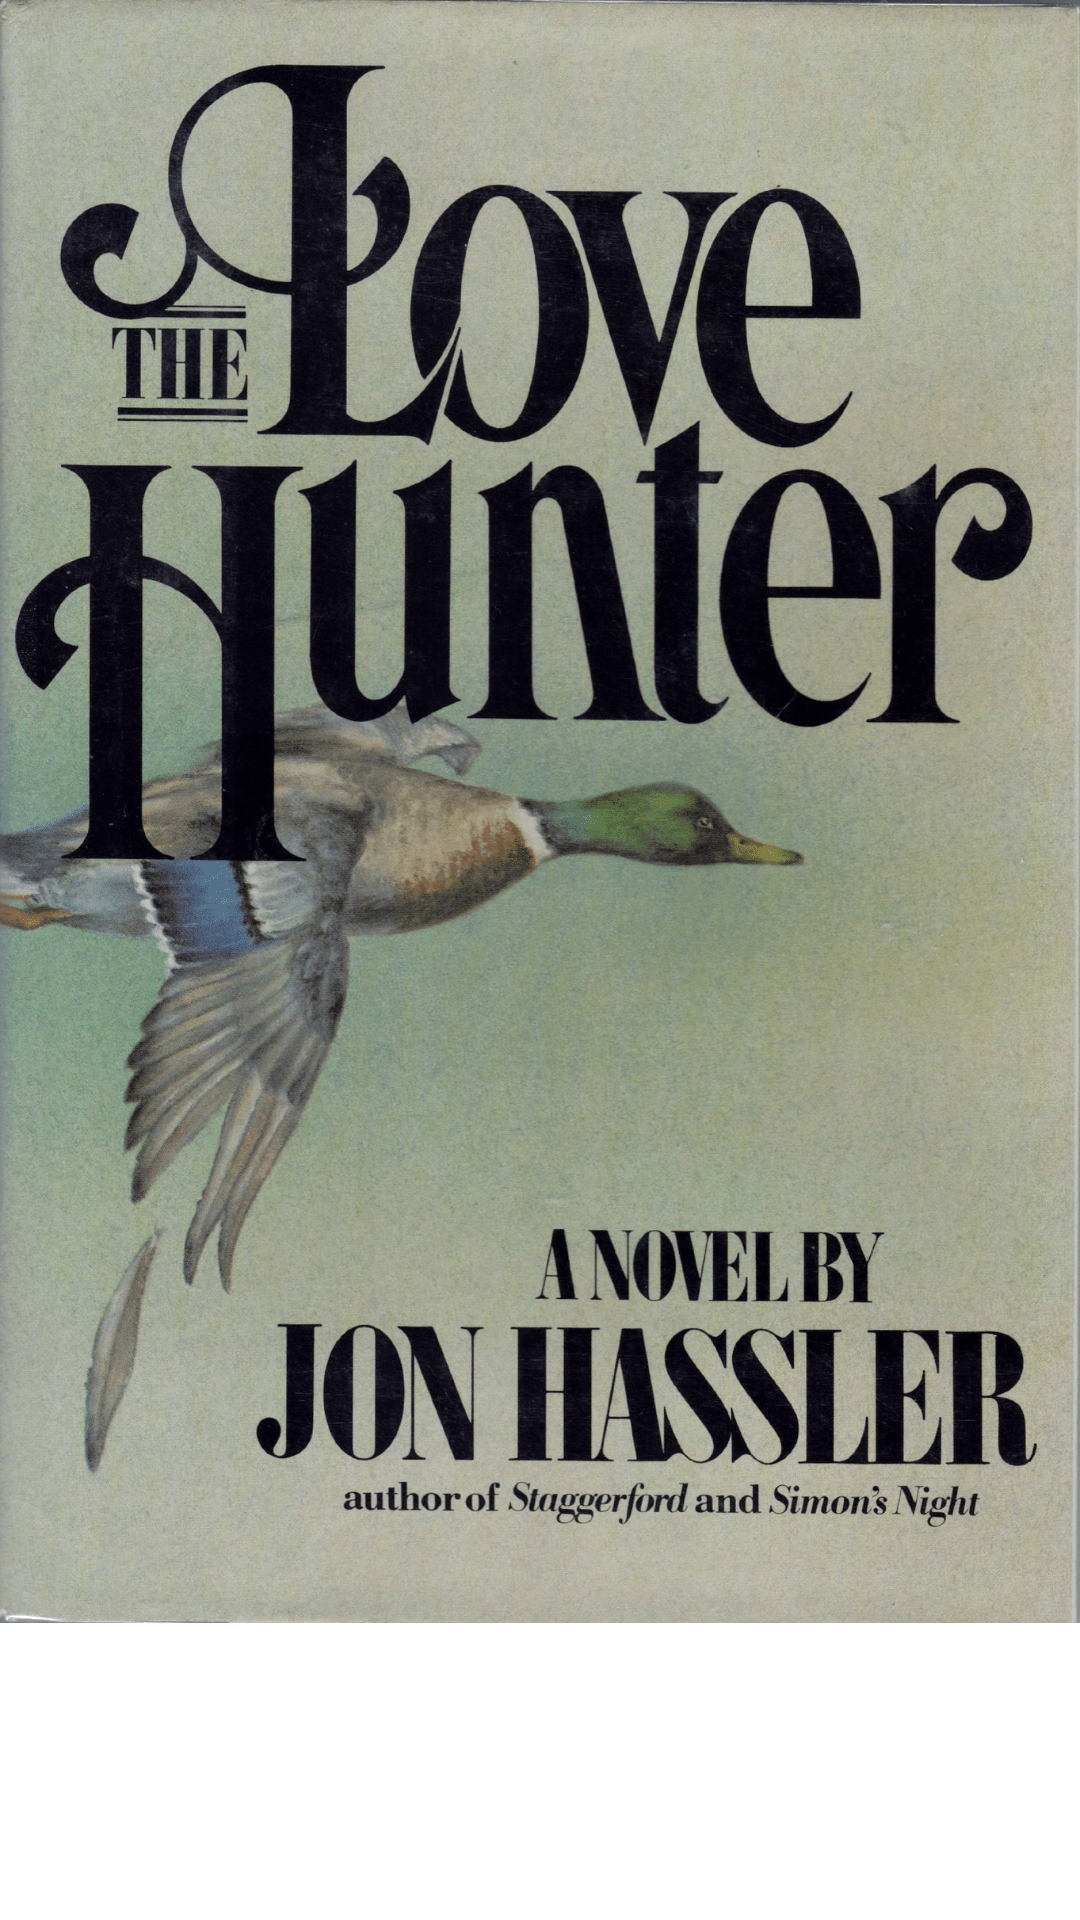 The Love Hunter by Jon Hassler